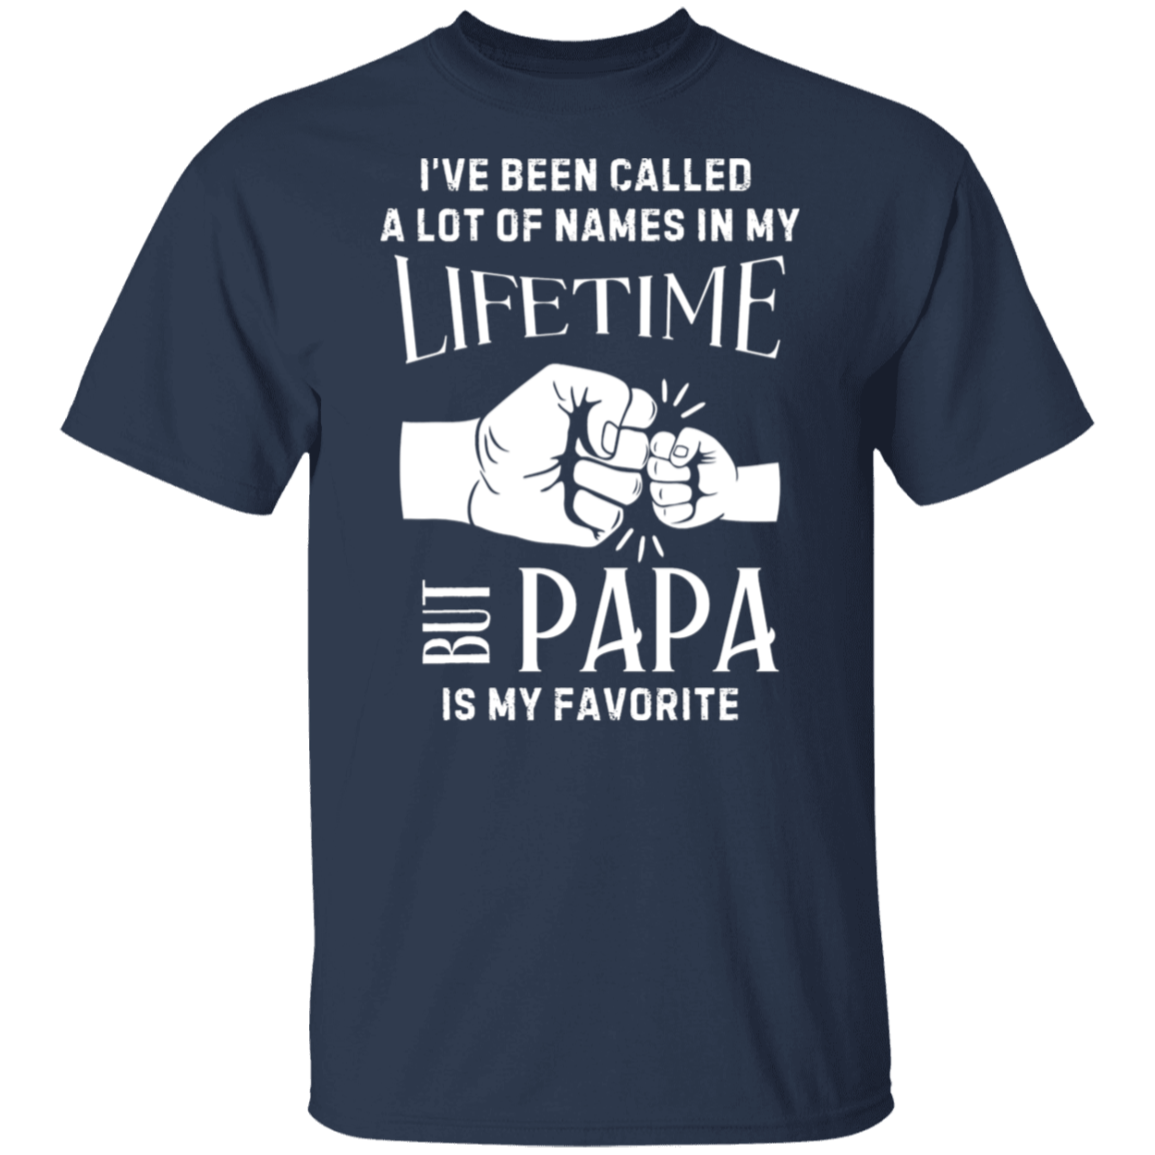 Papa is my favorite  5.3 oz. T-Shirt